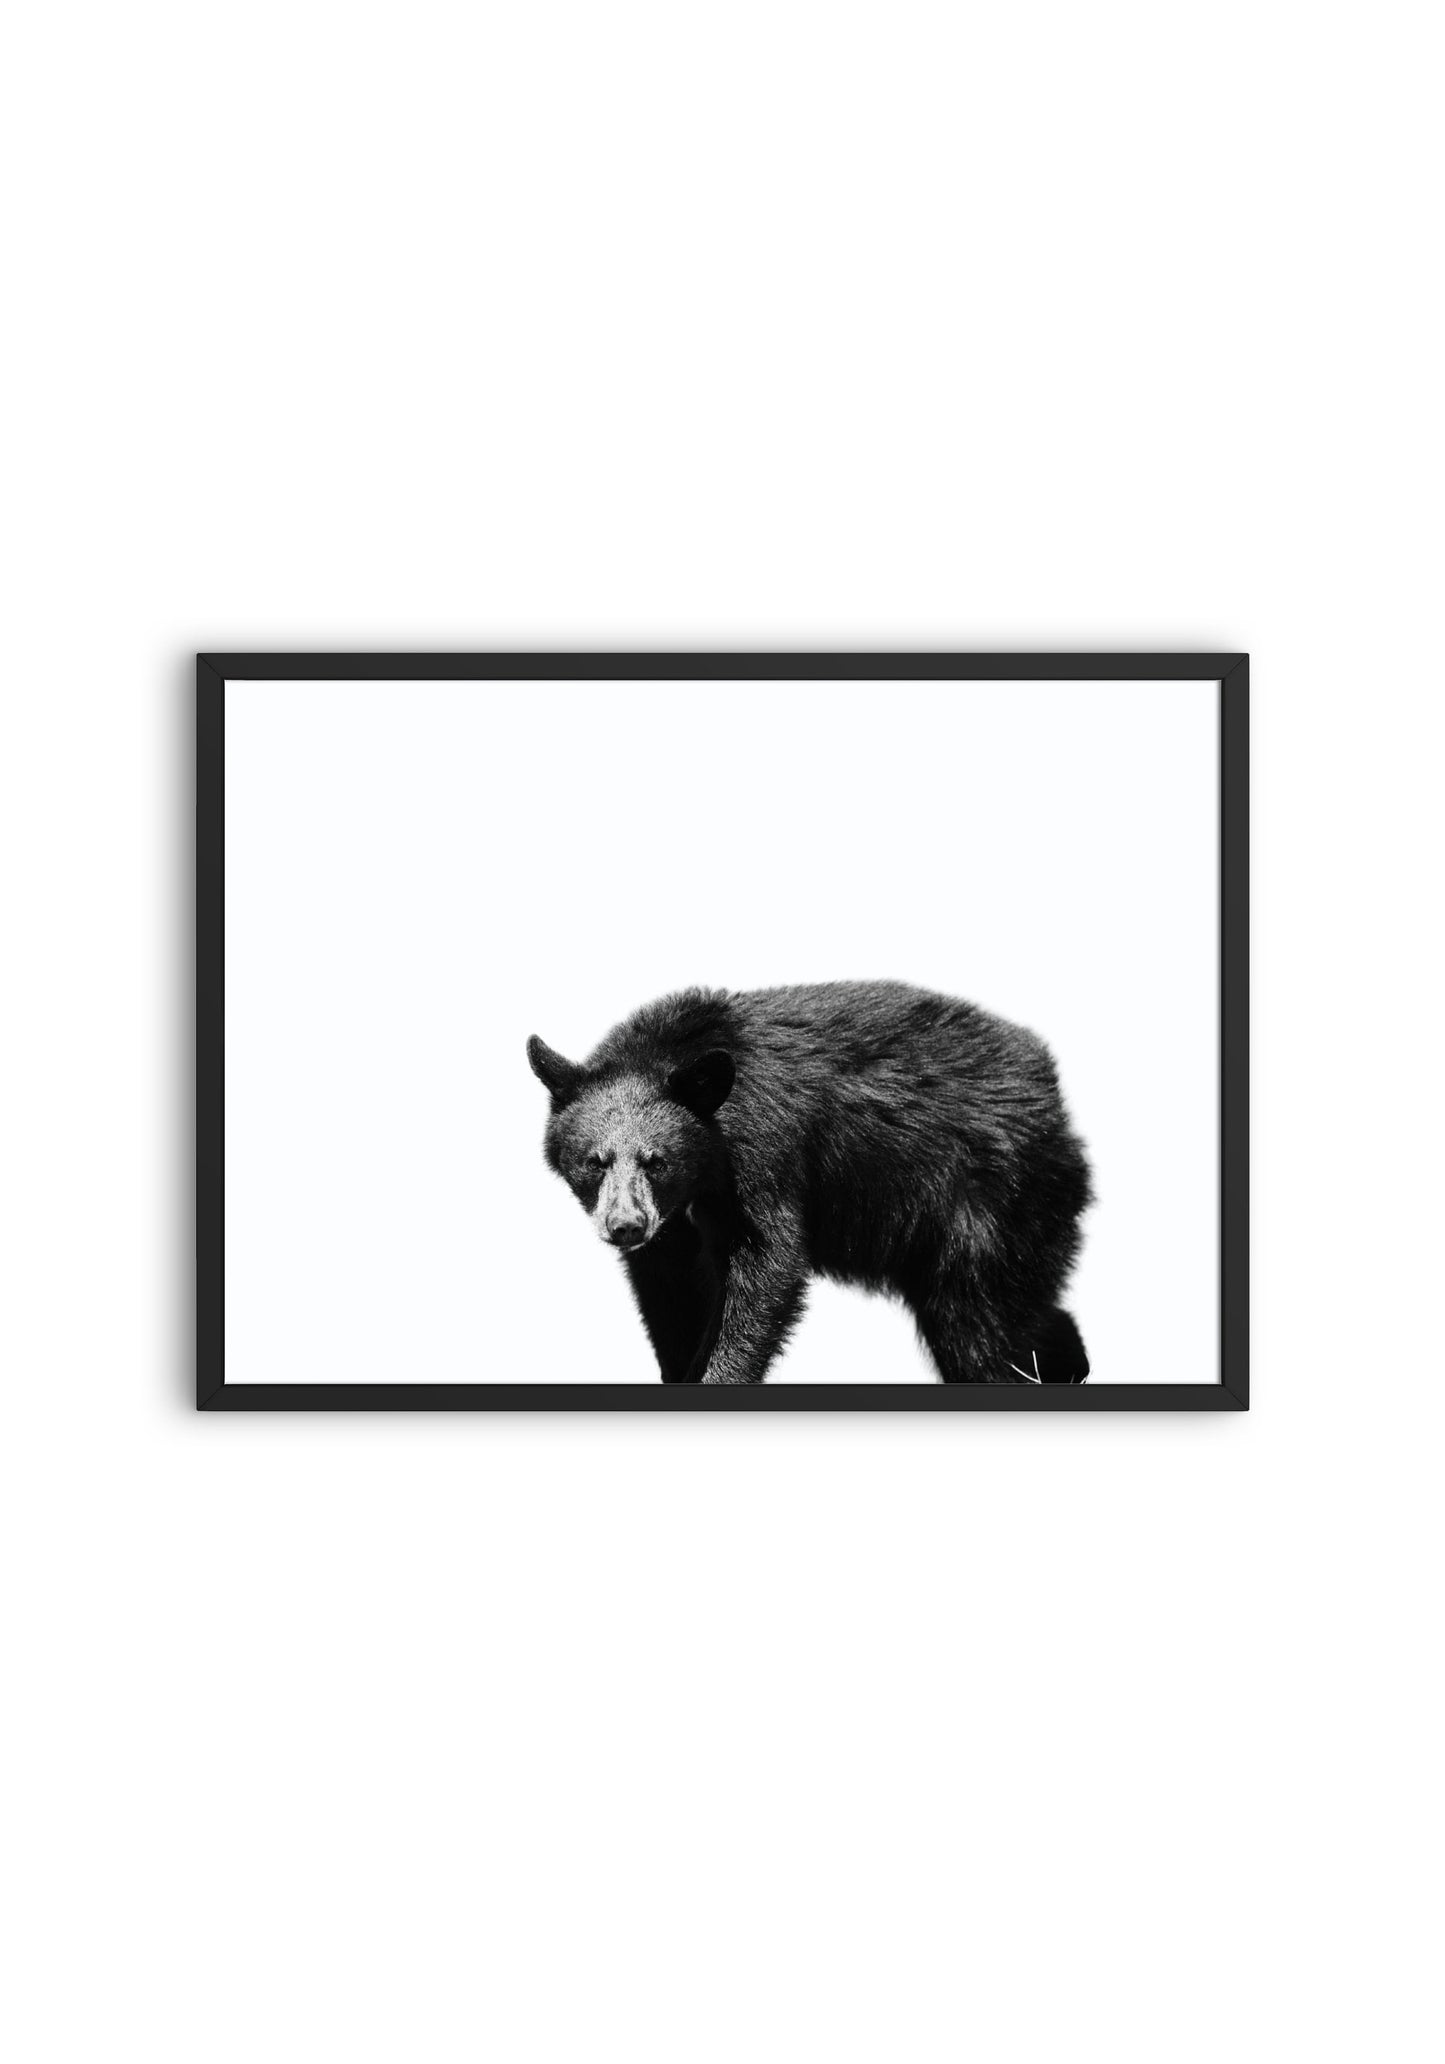 Black and White bear artwork DIGITAL PRINT, horizontal poster, black bear painting, Country Animal Print, Nordic print, forest animal print